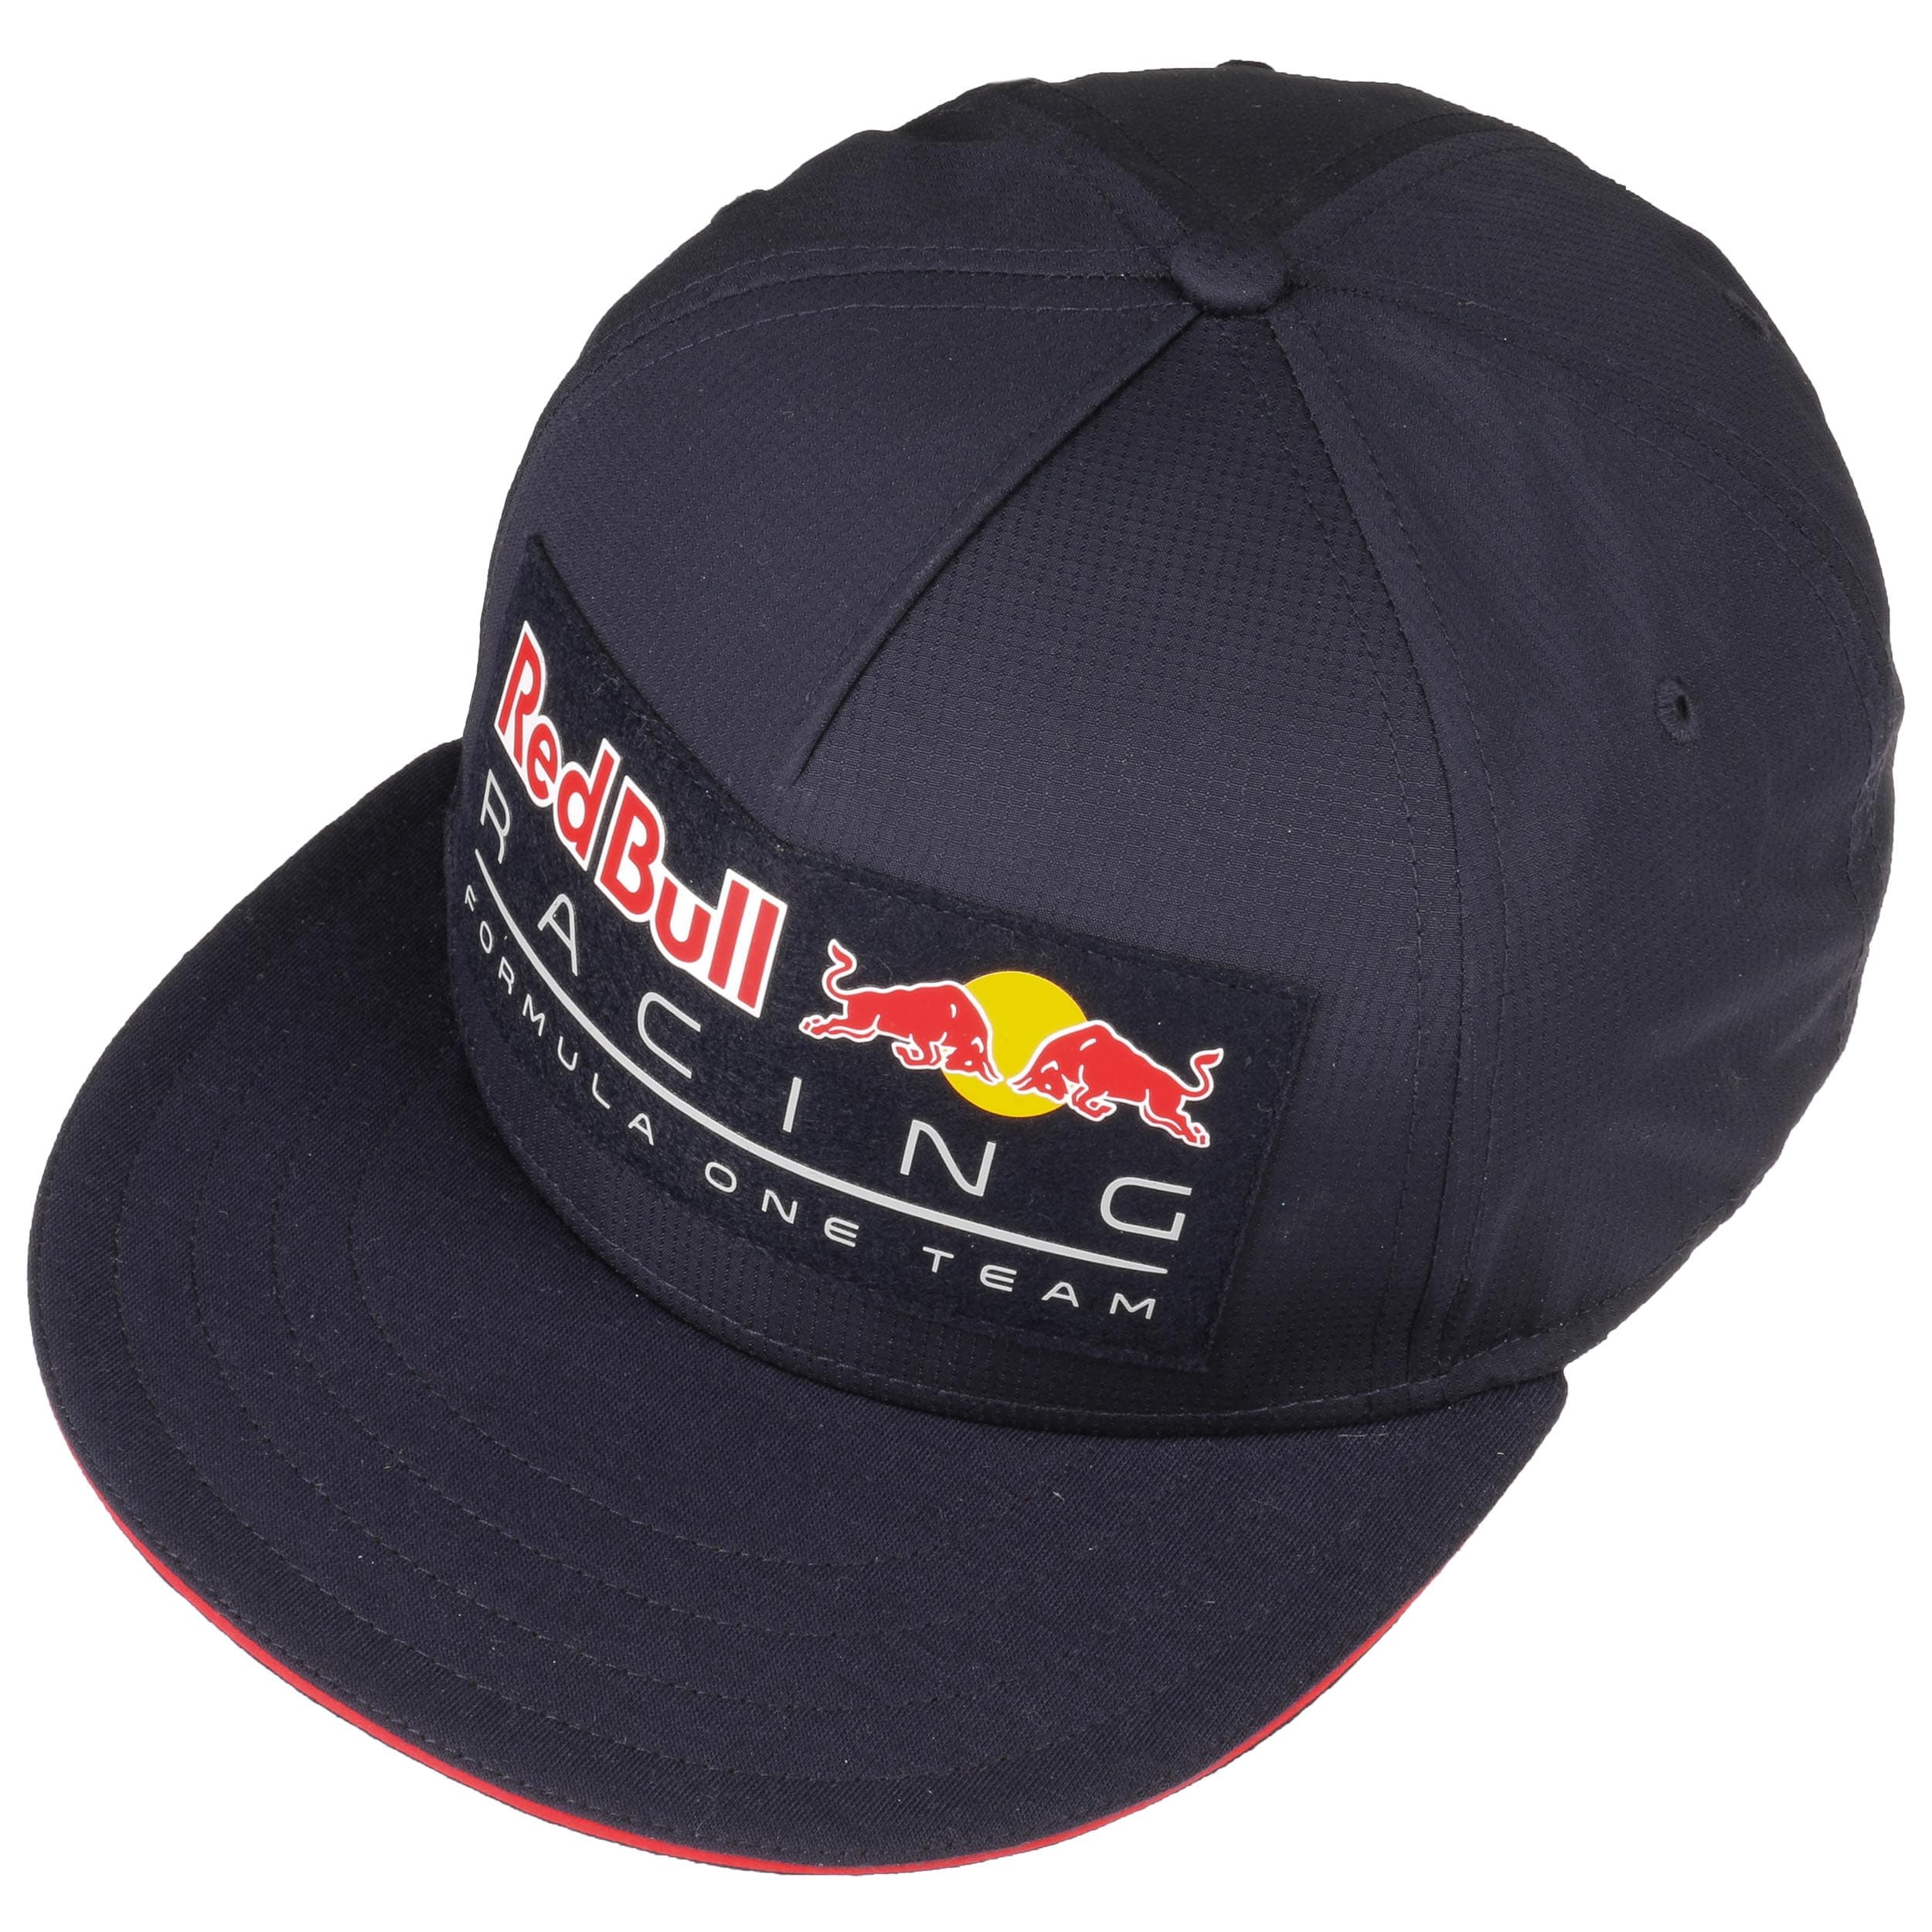 Red Bull Racing Cap : Redbull Racing F1 Team Max Verstappen Cap Navy ...